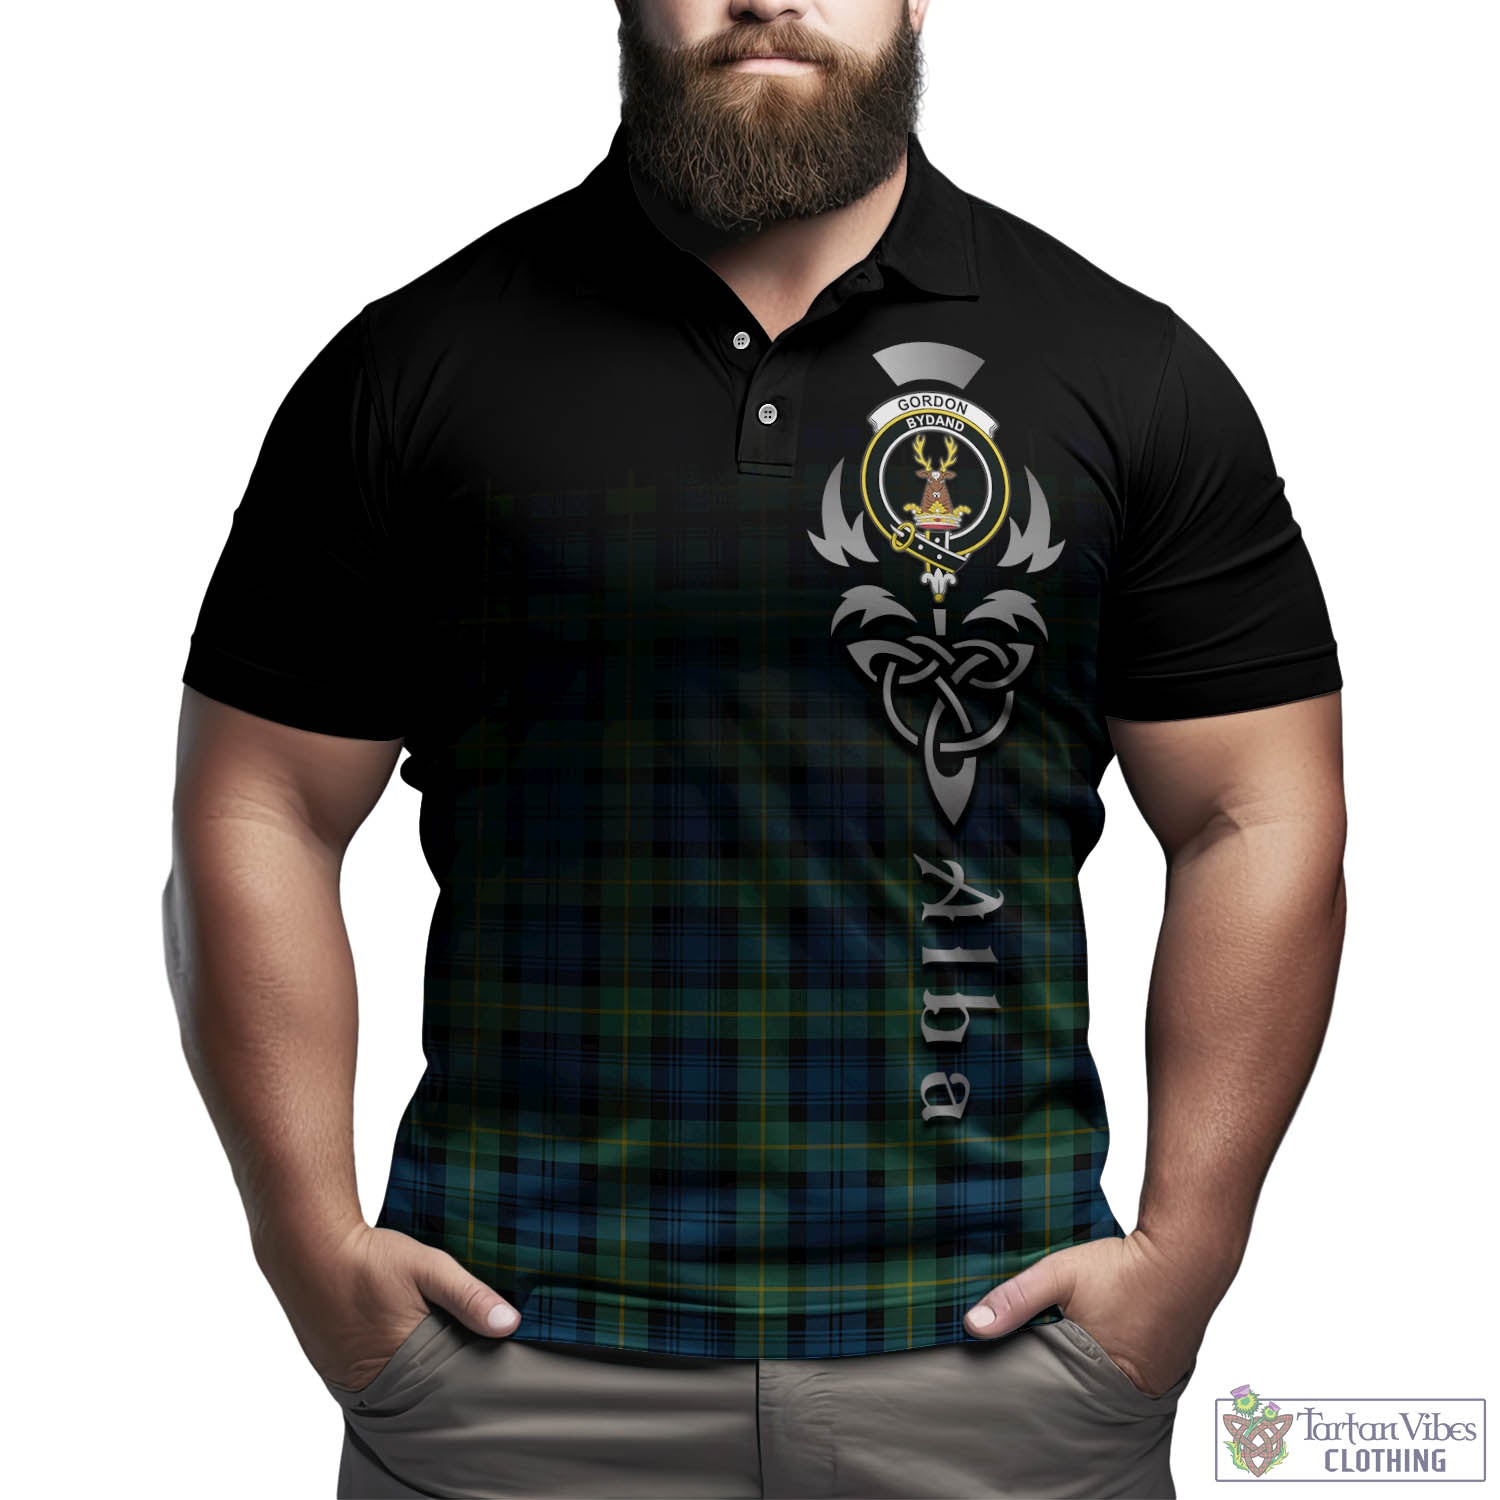 Tartan Vibes Clothing Gordon Ancient Tartan Polo Shirt Featuring Alba Gu Brath Family Crest Celtic Inspired